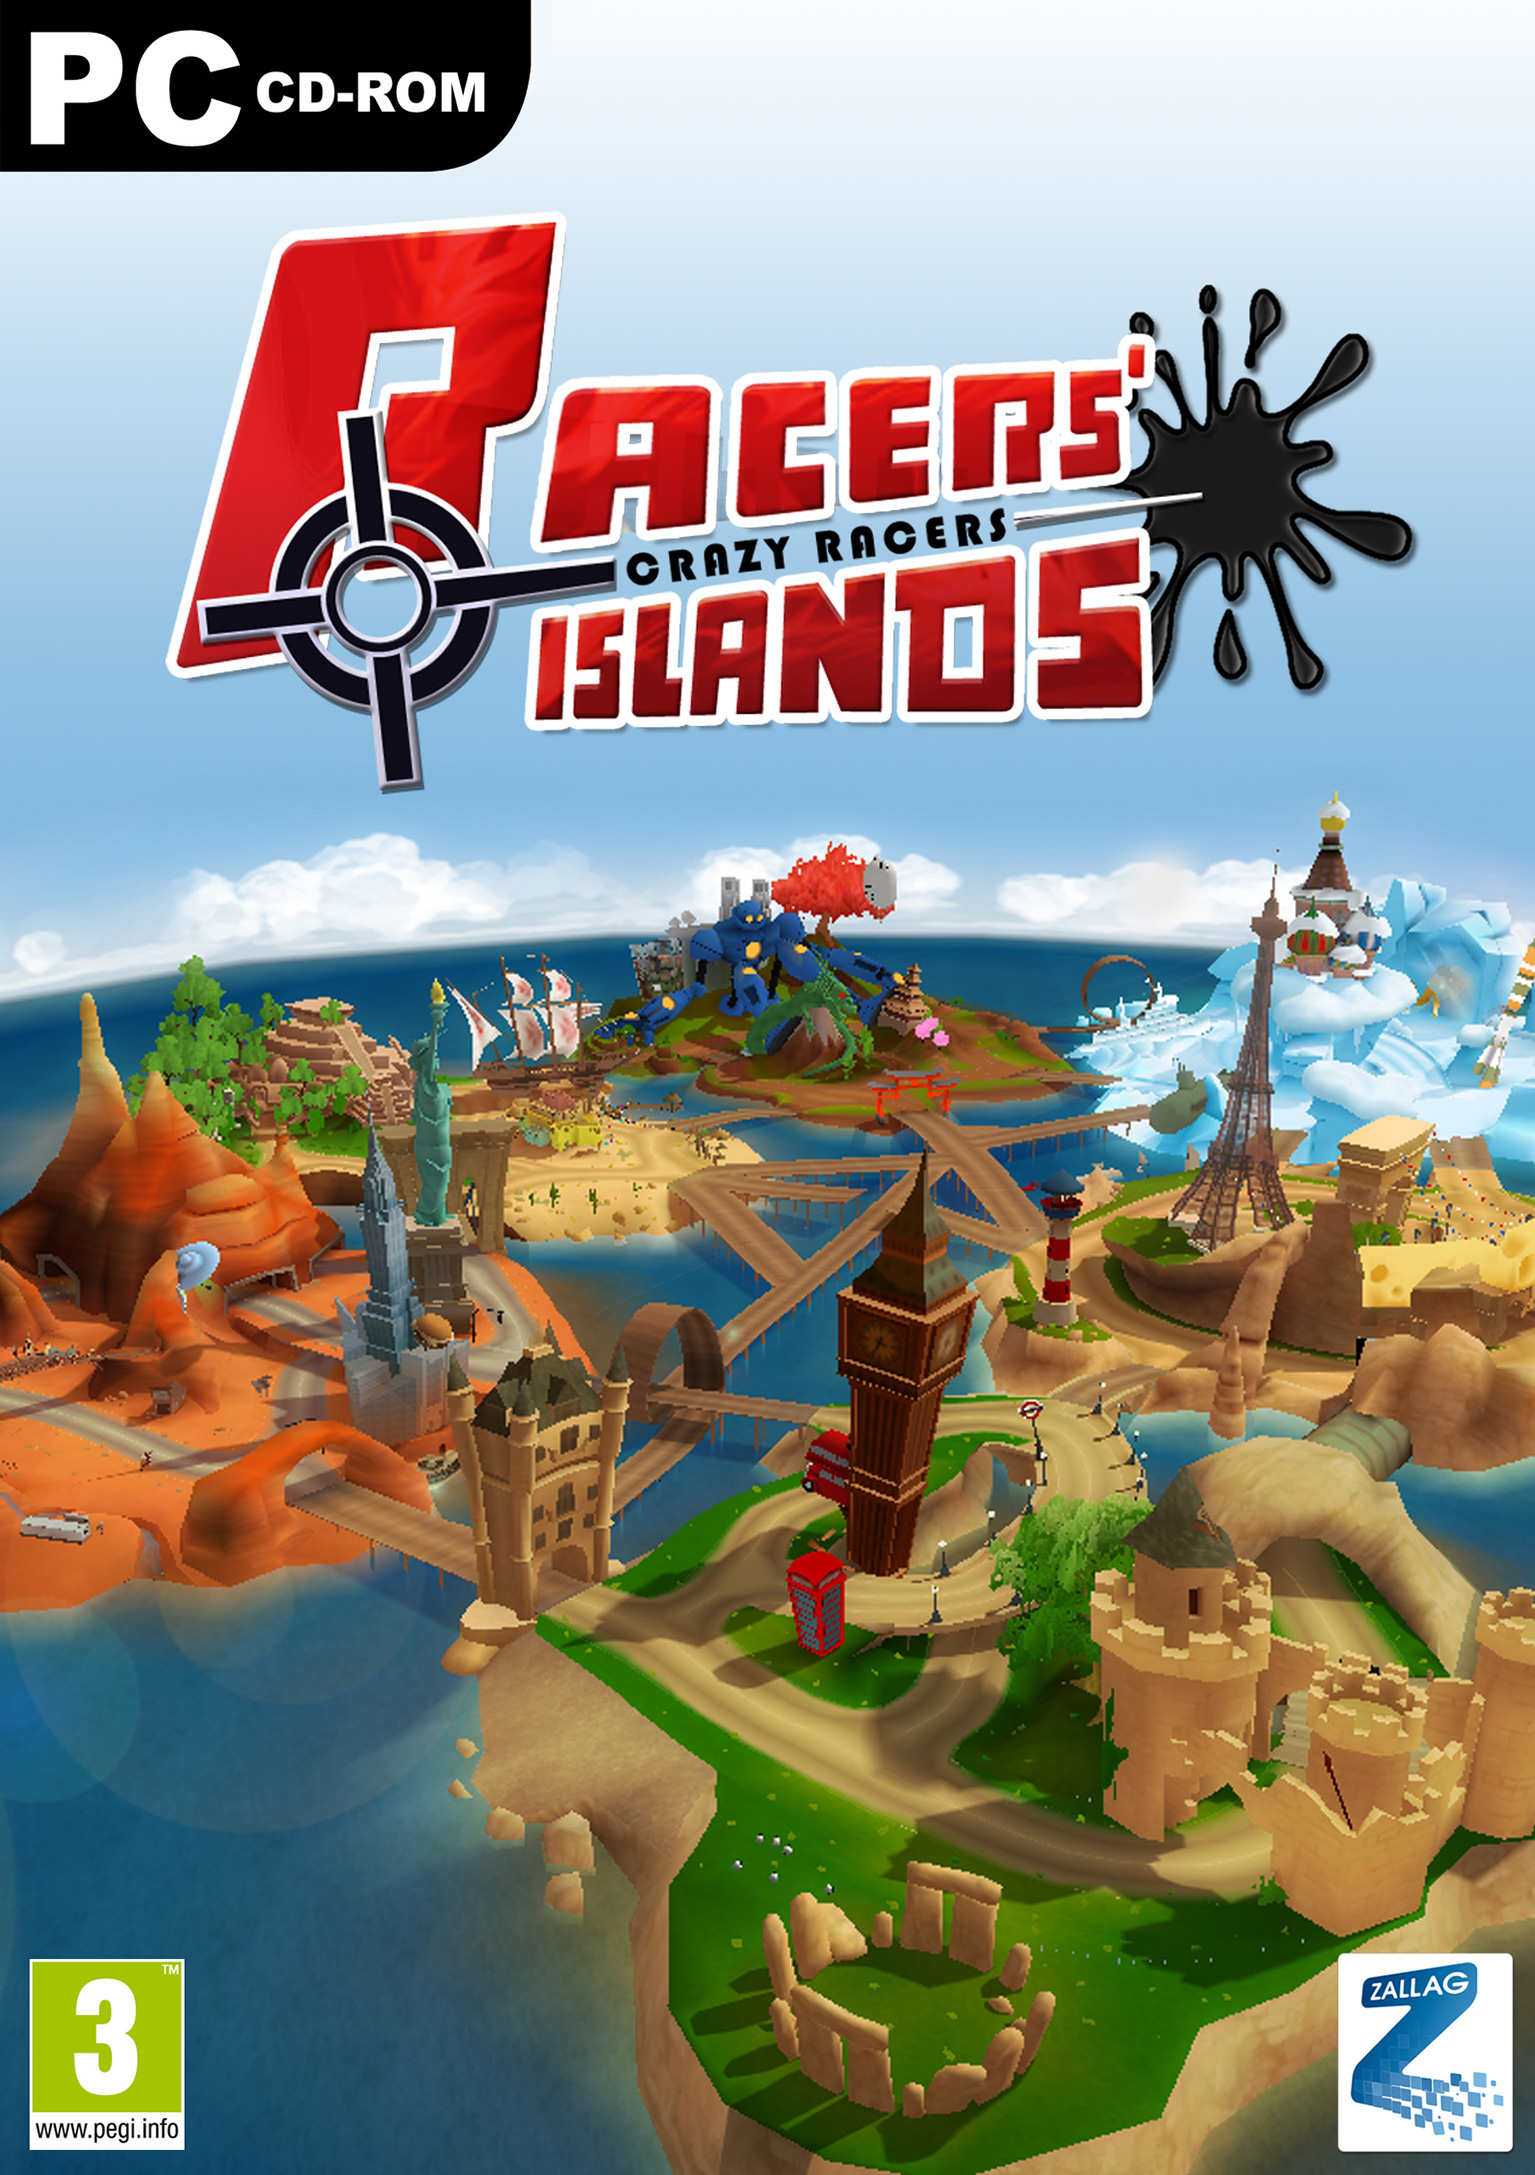 Racers' Islands: Crazy Racers - predn DVD obal